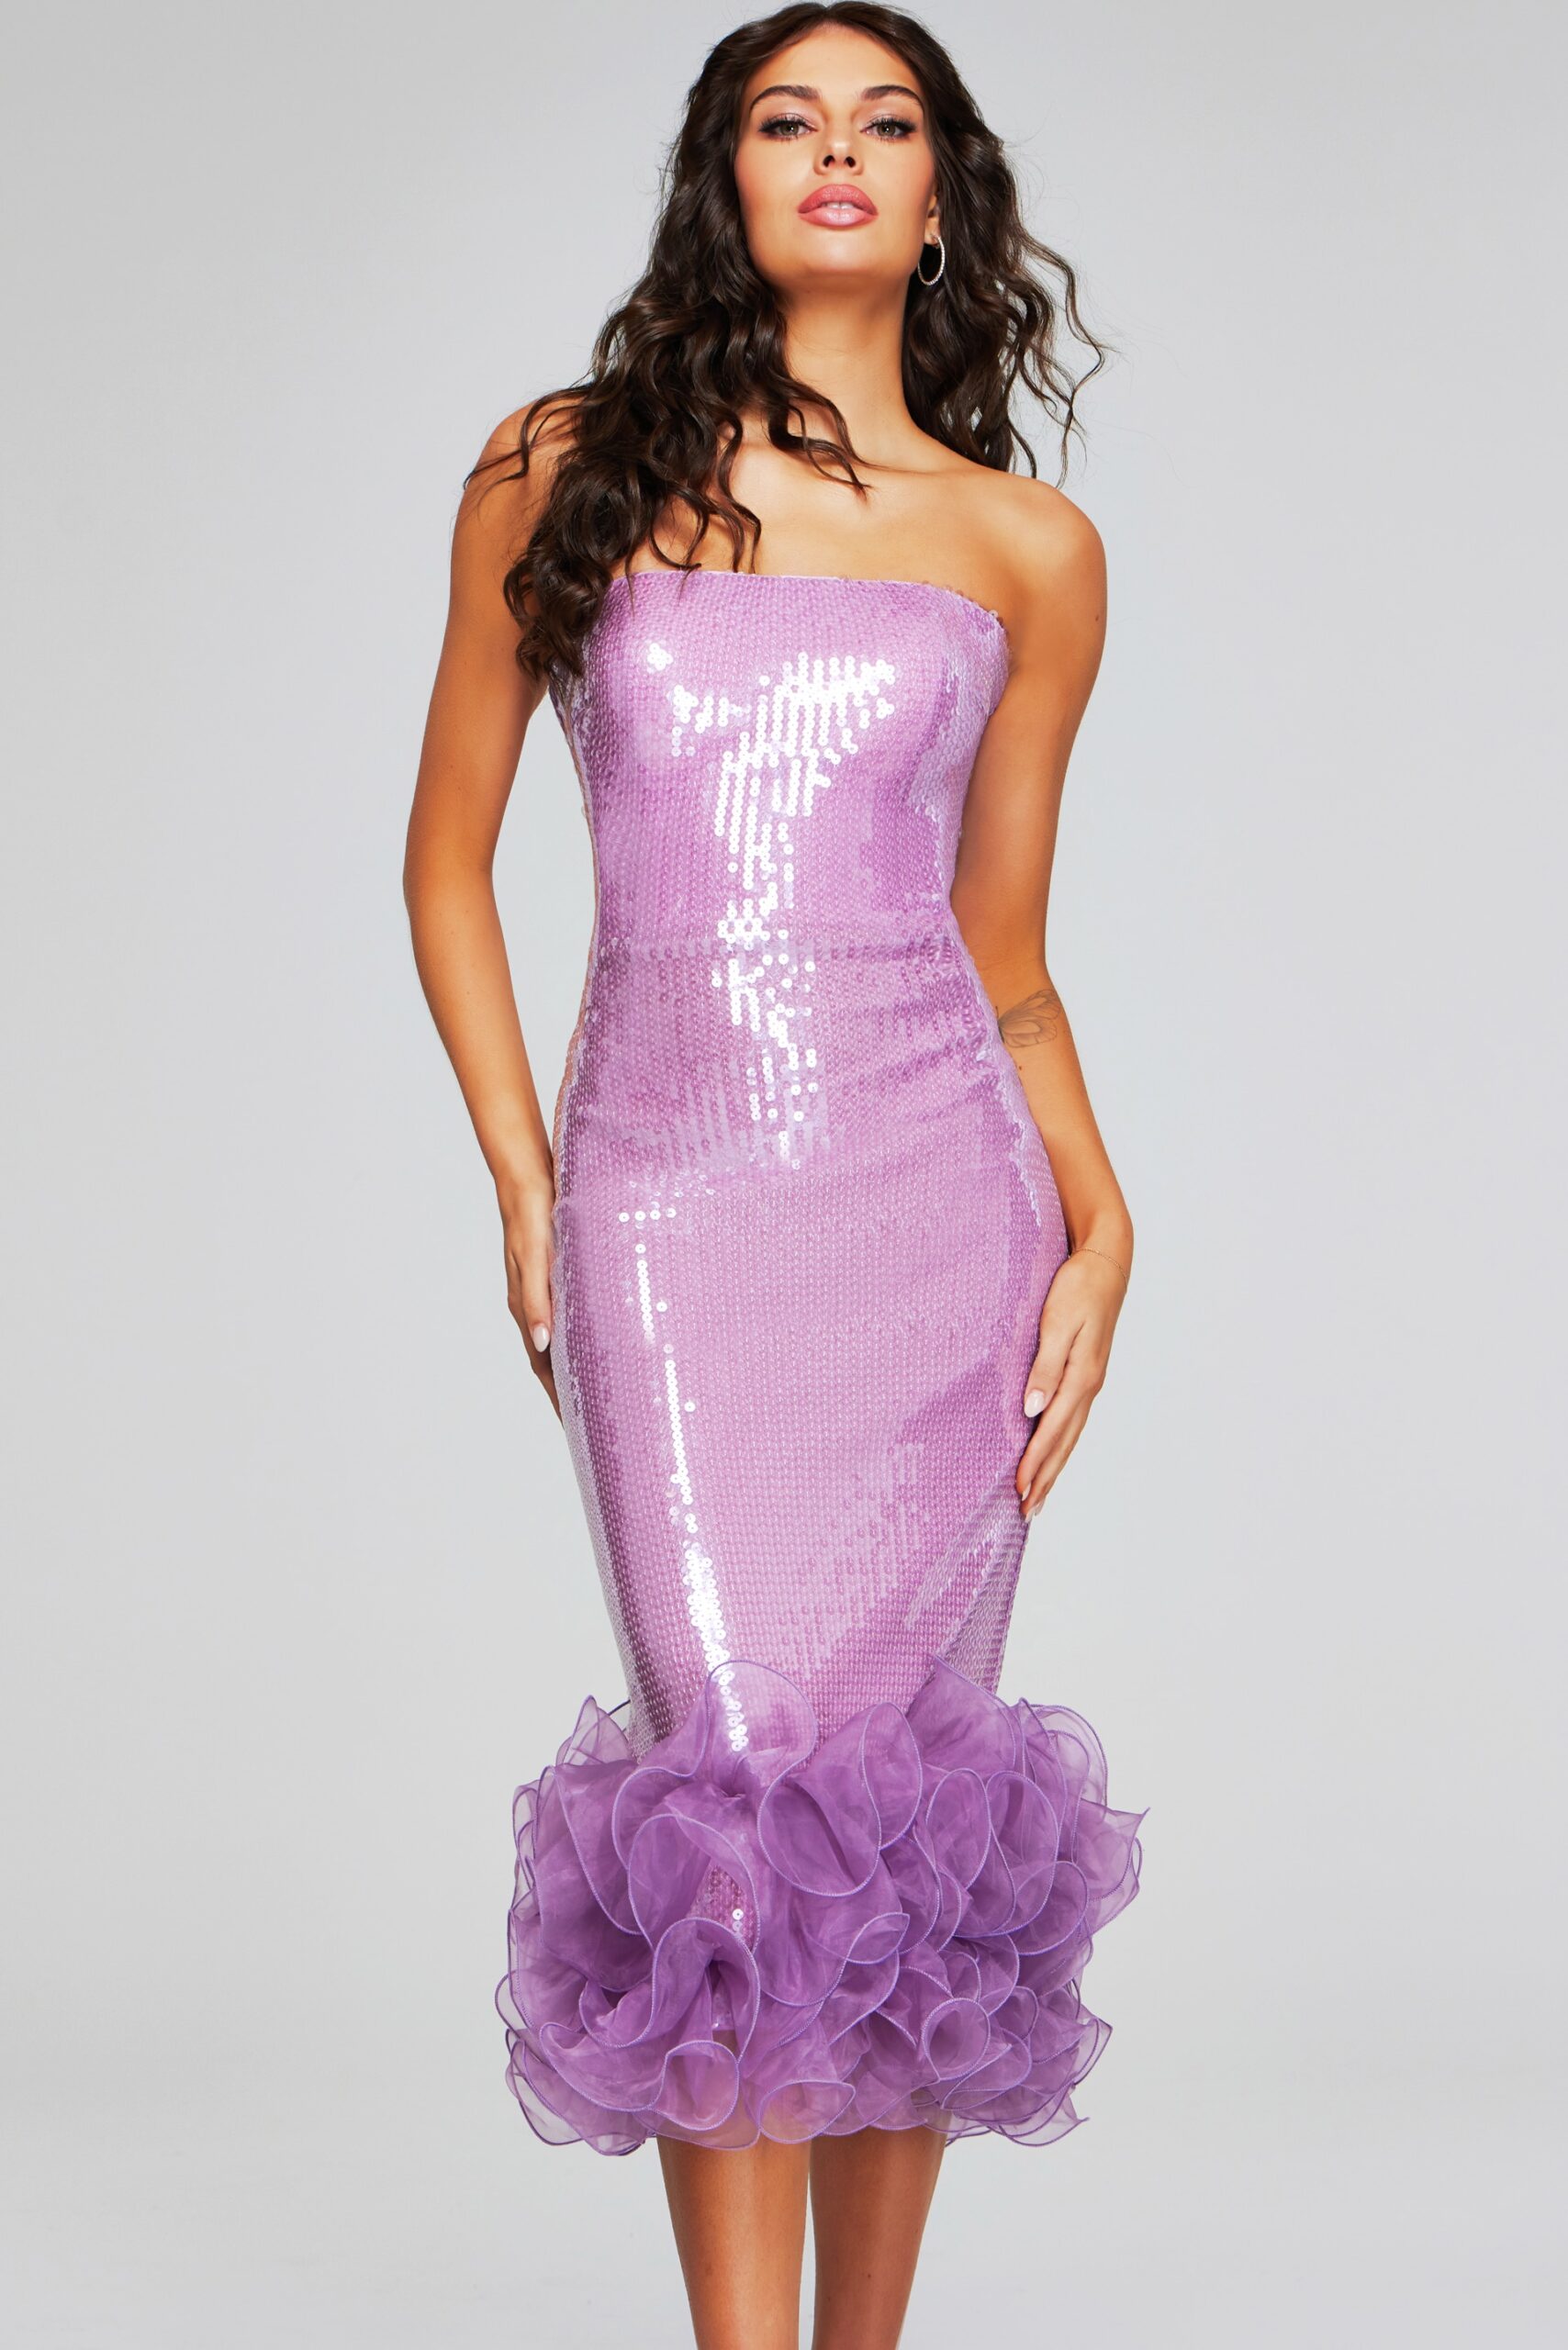 Sparkling Lilac Sequin Strapless Dress 43598